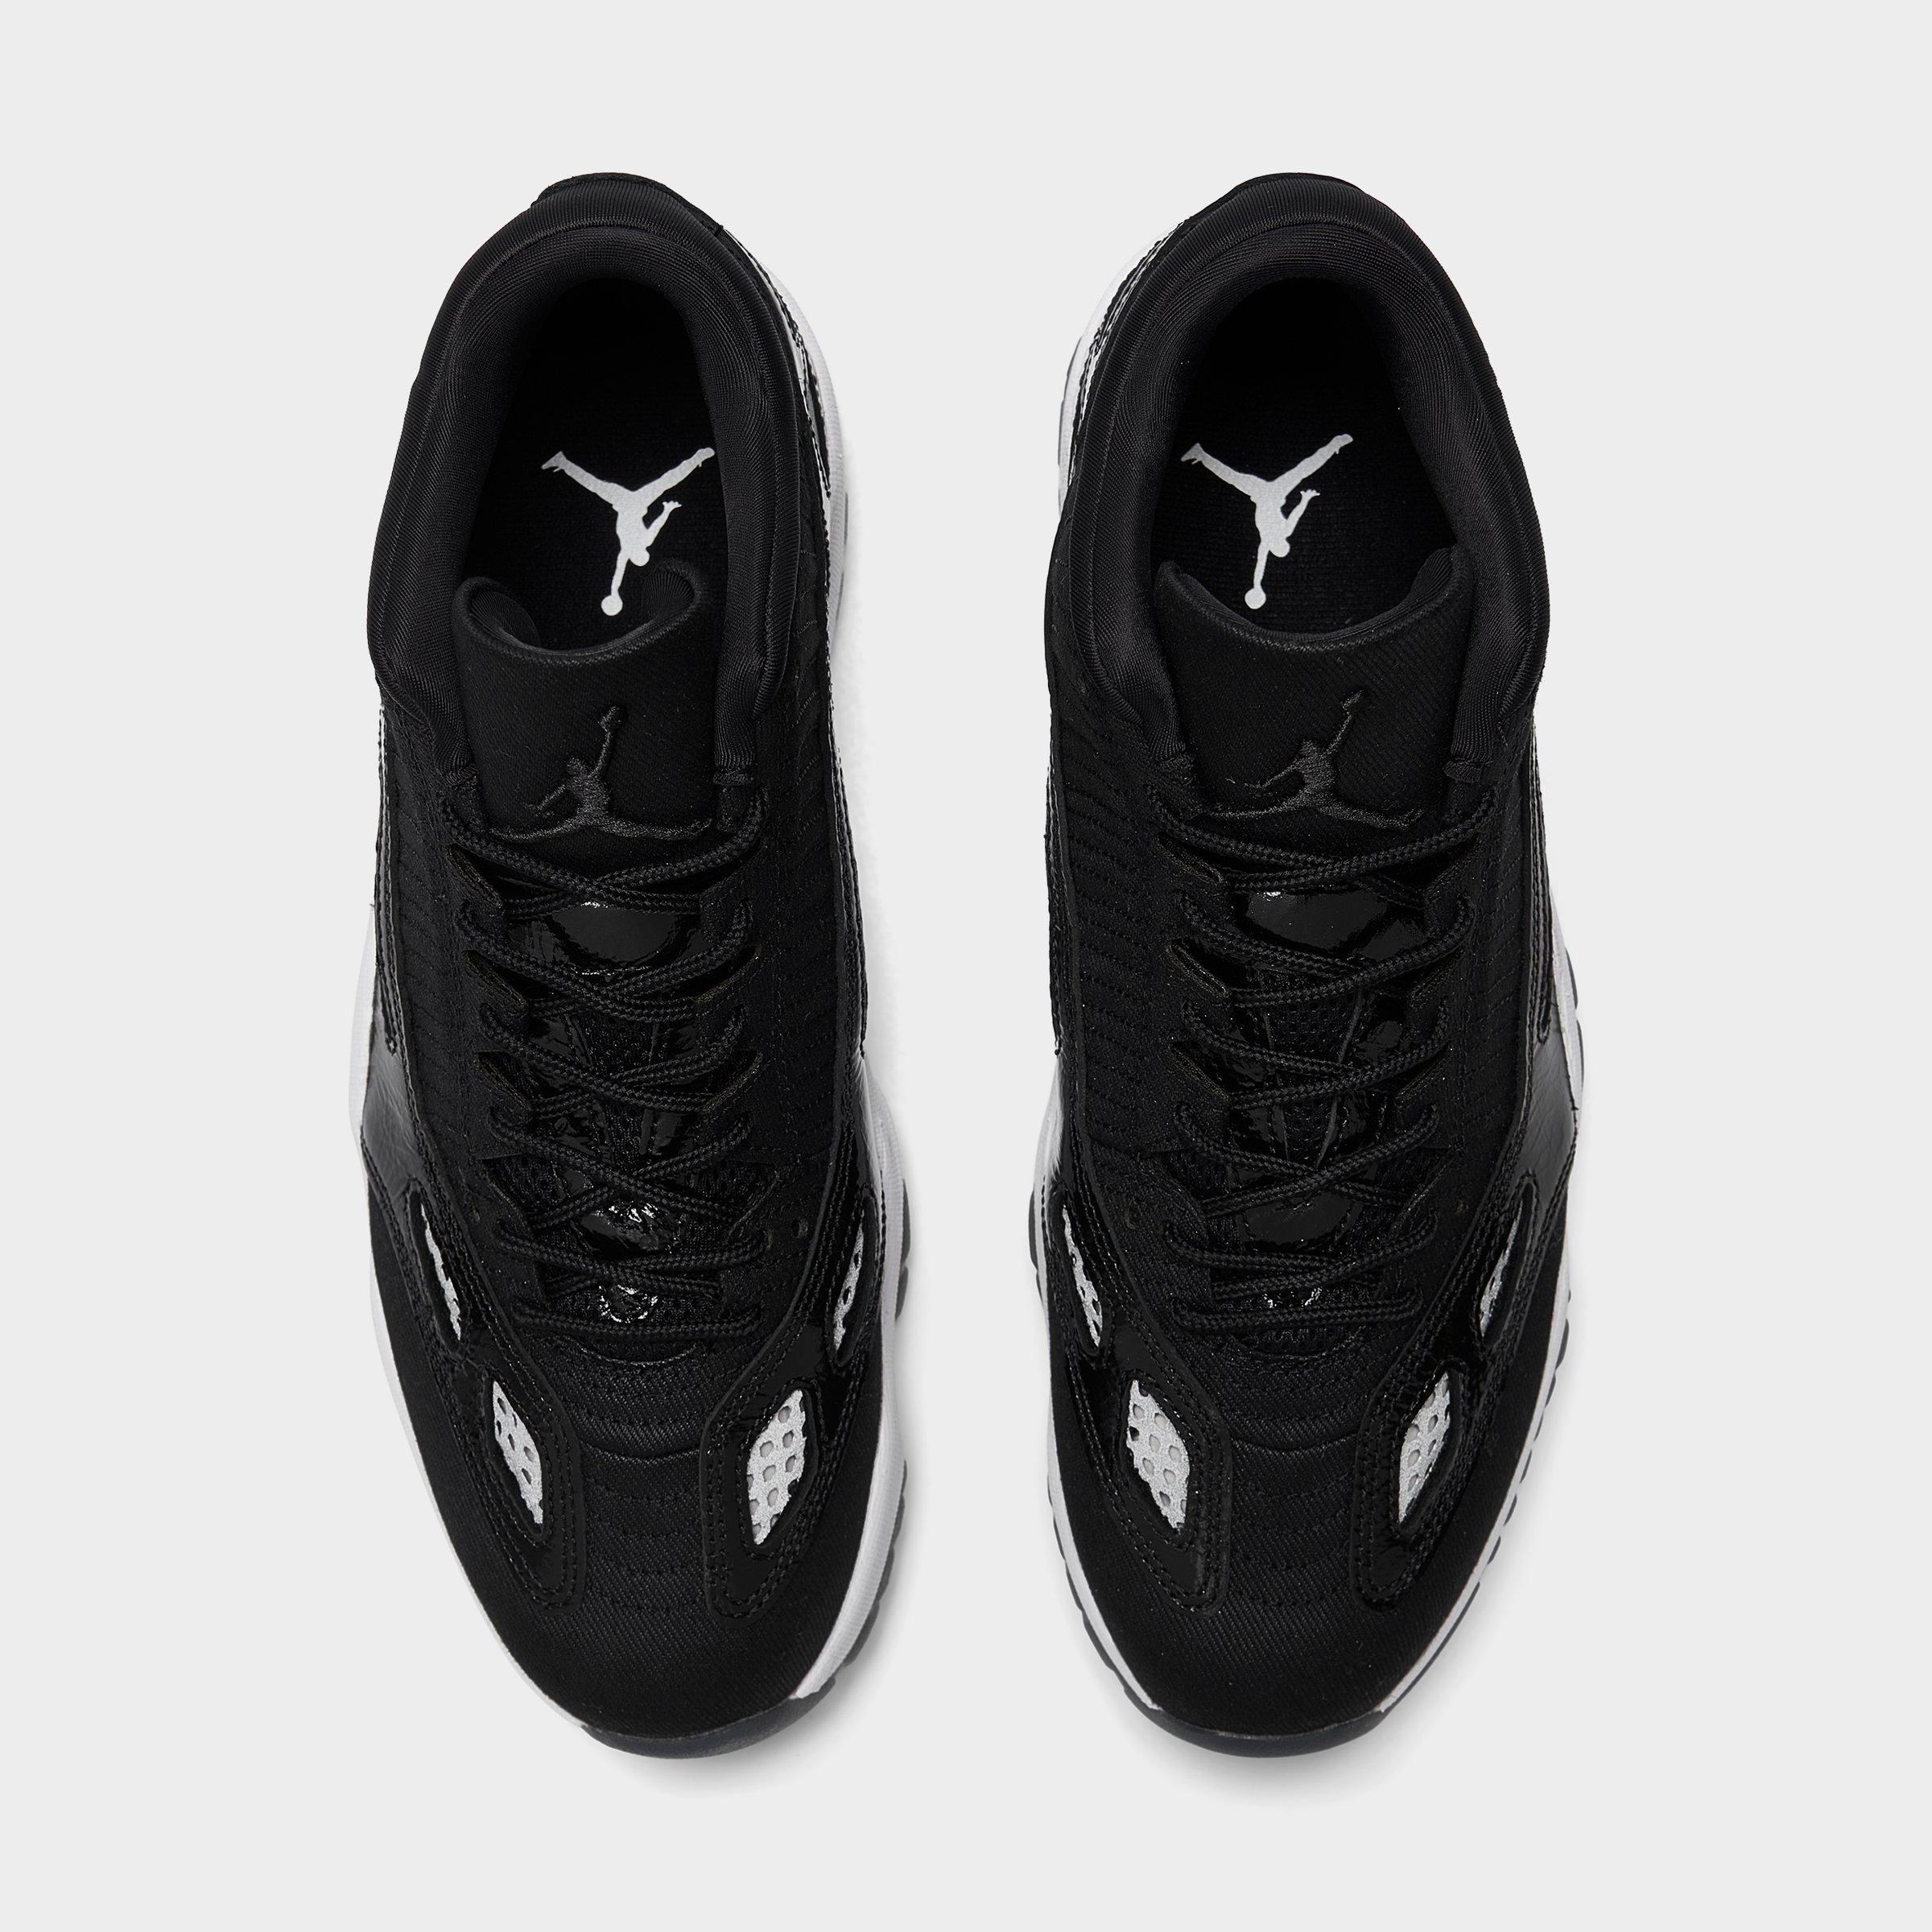 Air Jordan Retro 11 Low IE Basketball Shoes| JD Sports